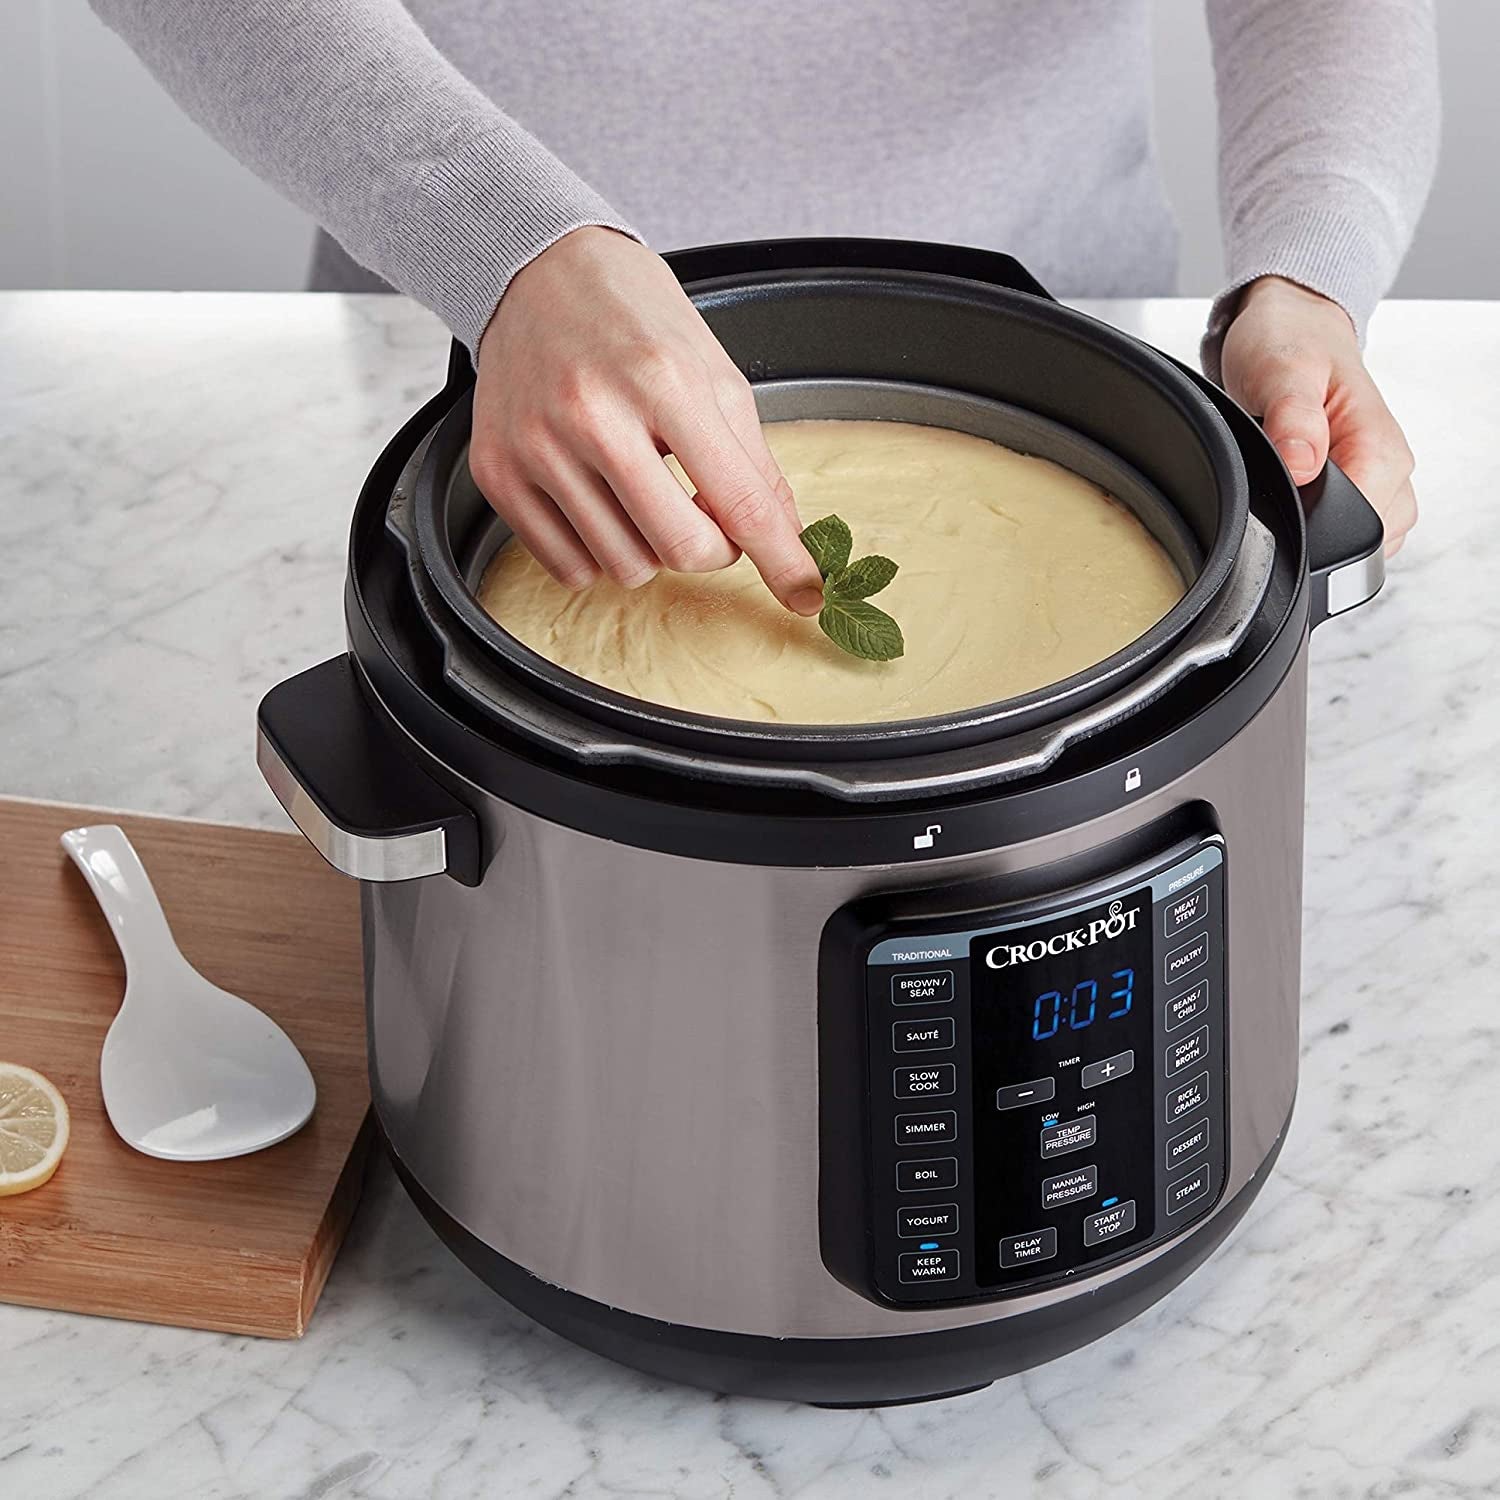  Crock-Pot Large 8 Quart Programmable Slow Cooker with